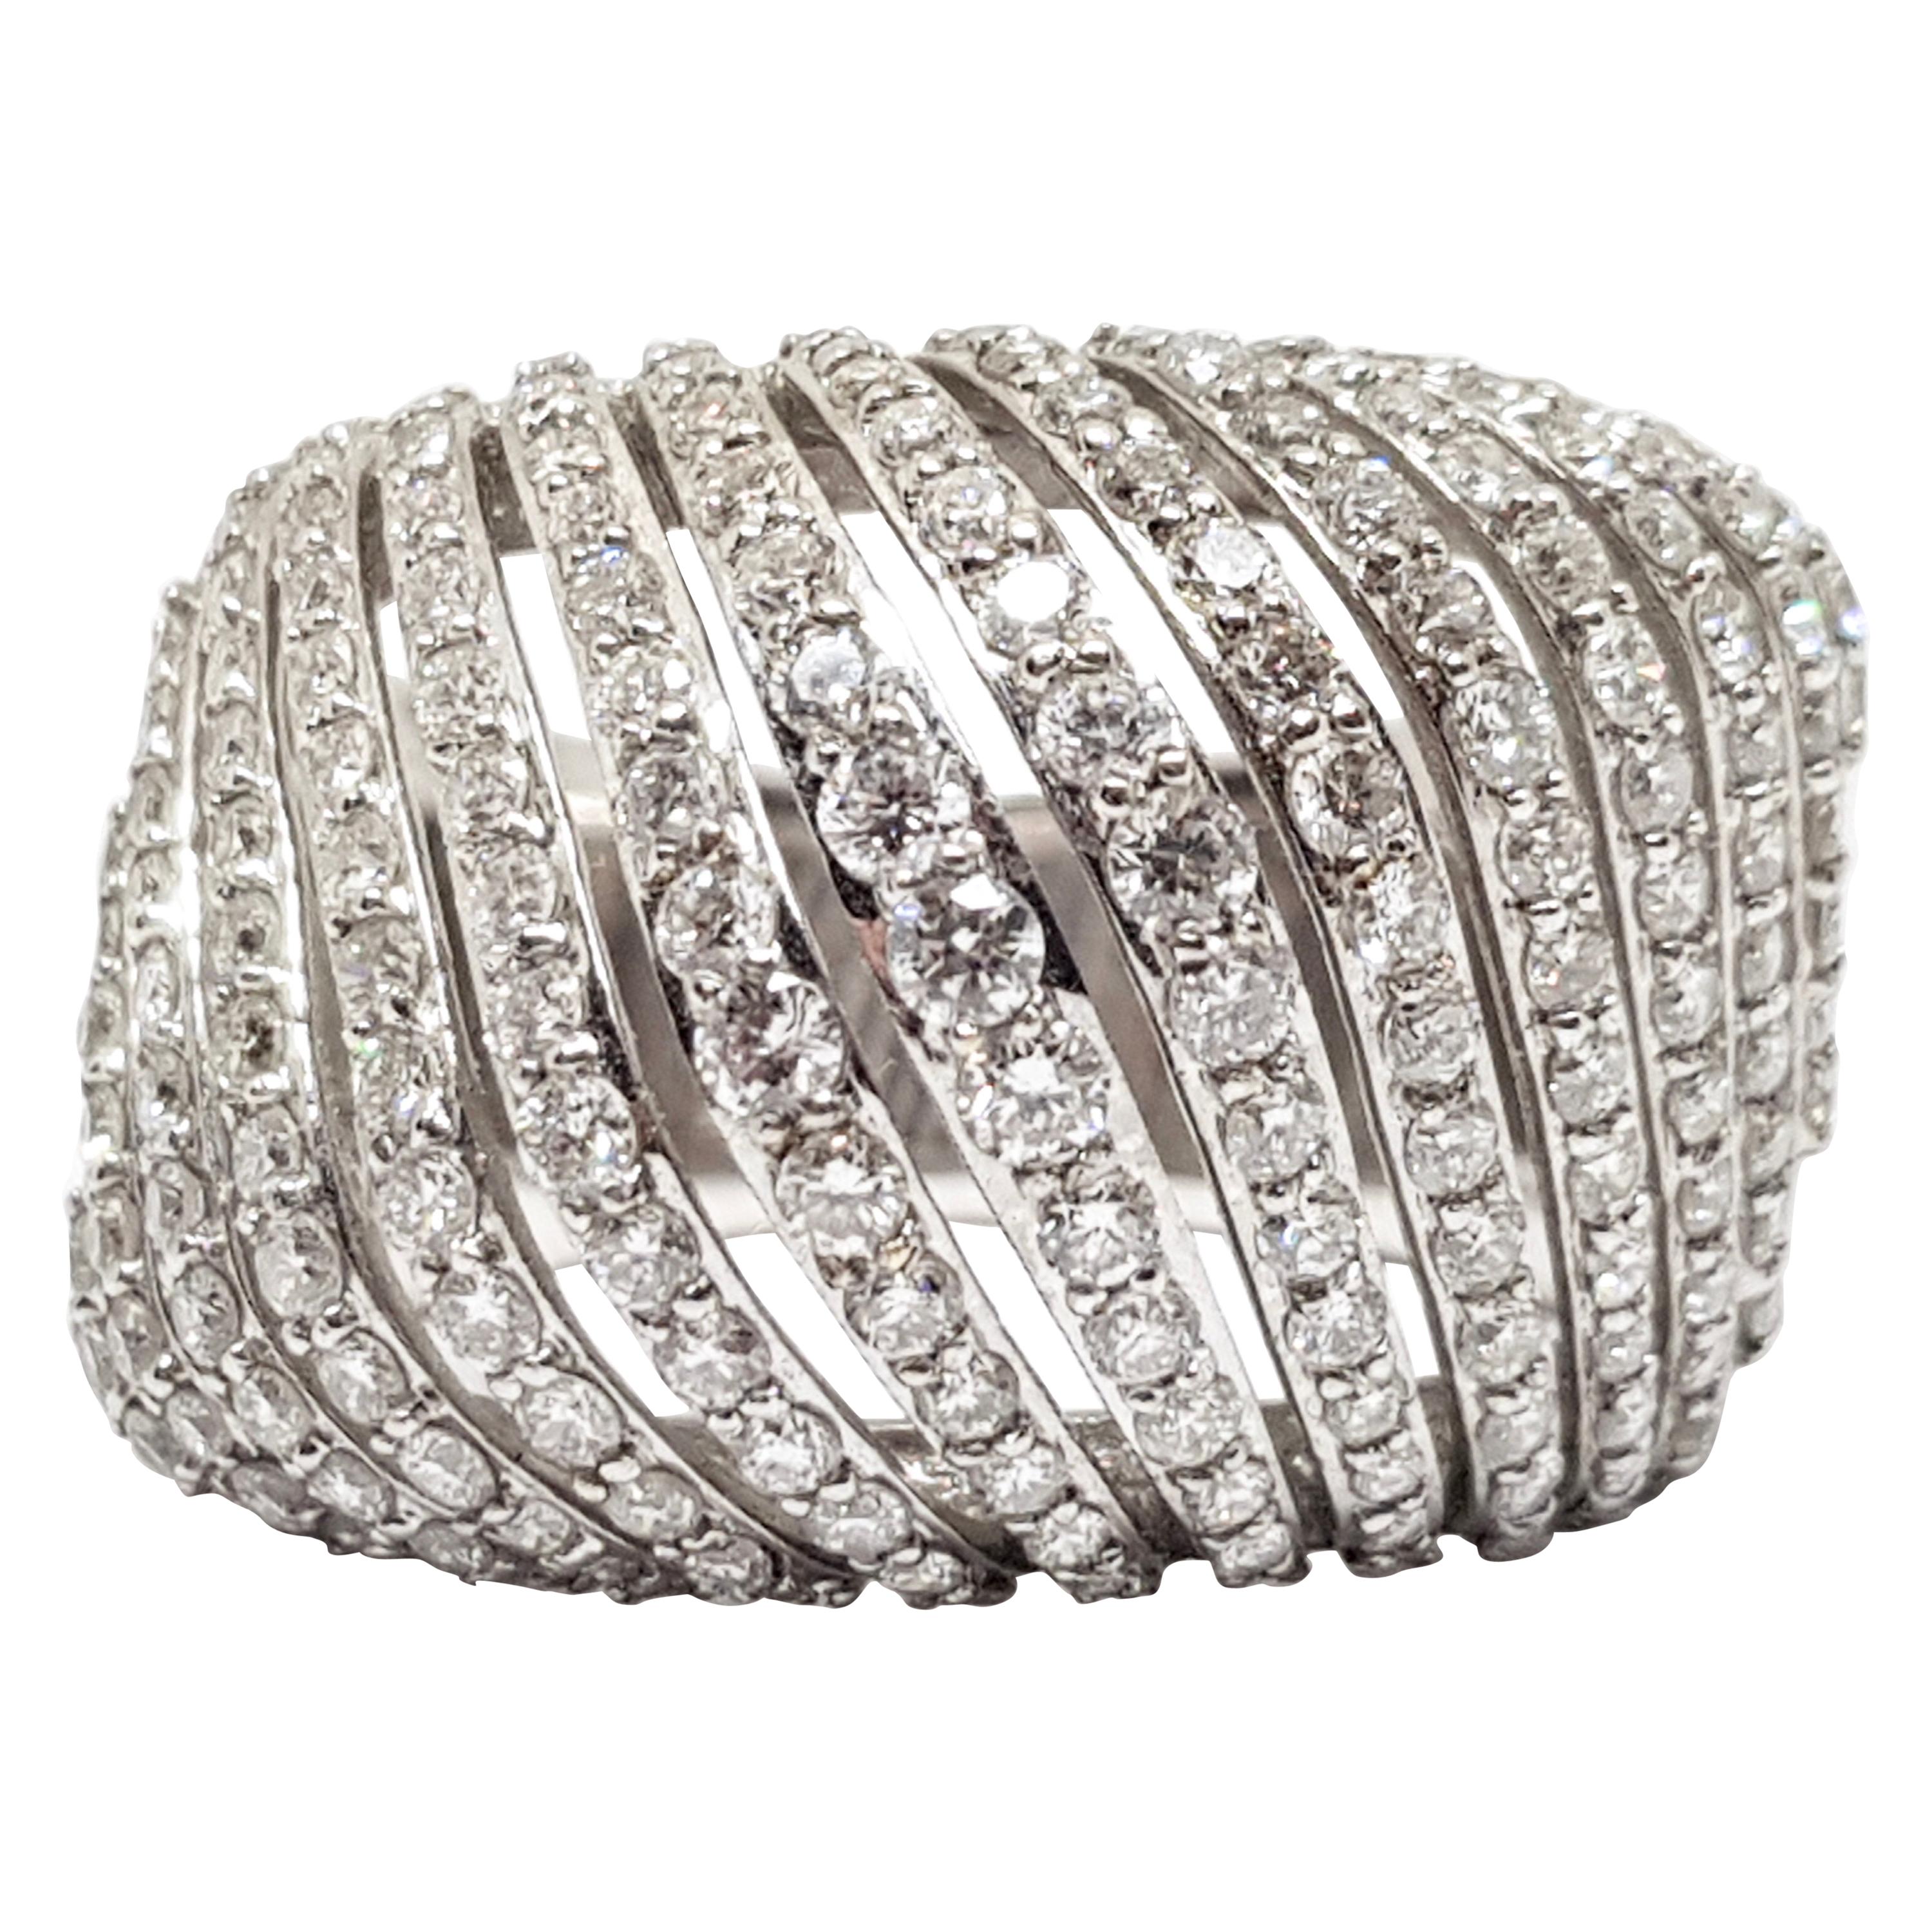 5.05 Carat Diamond Ring For Sale